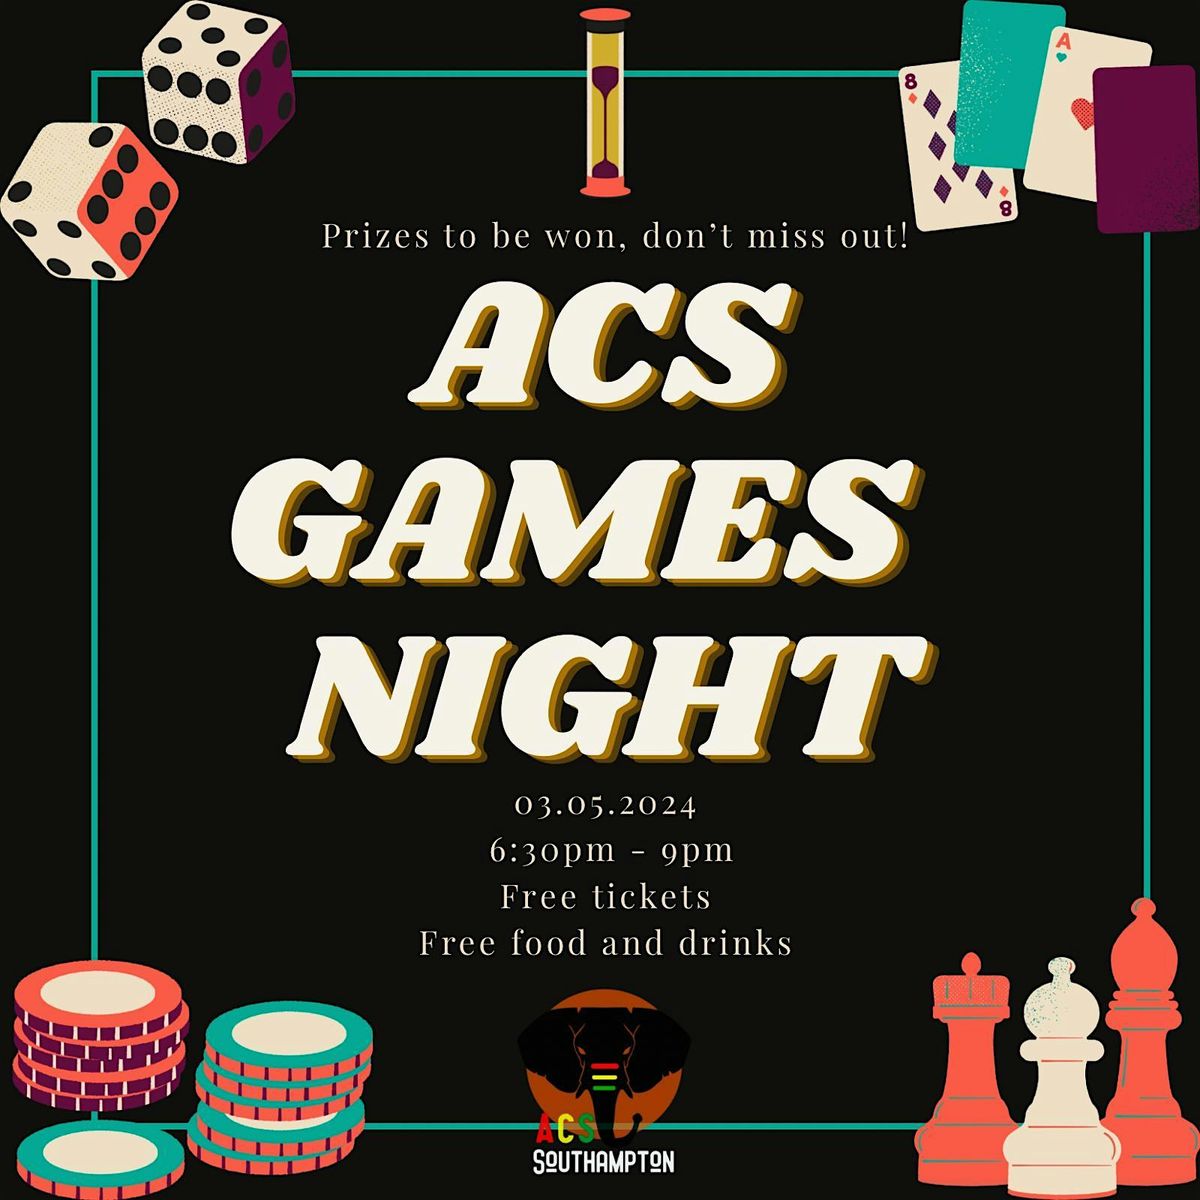 ACS Games night